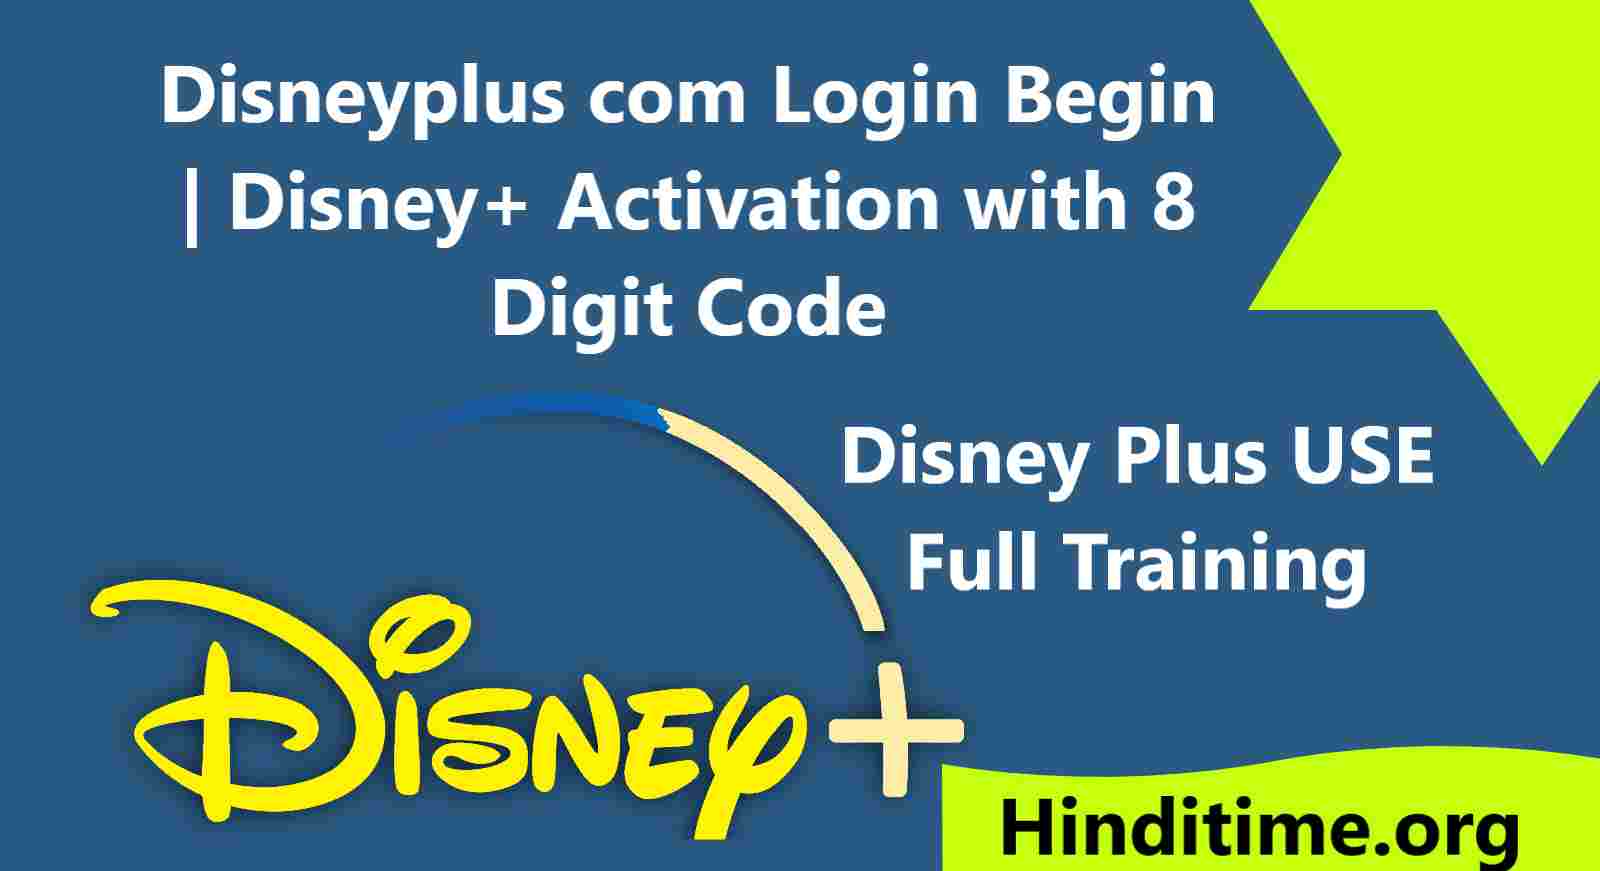 Disneyplus com Login Begin Disney Activation with 8 Digit Code